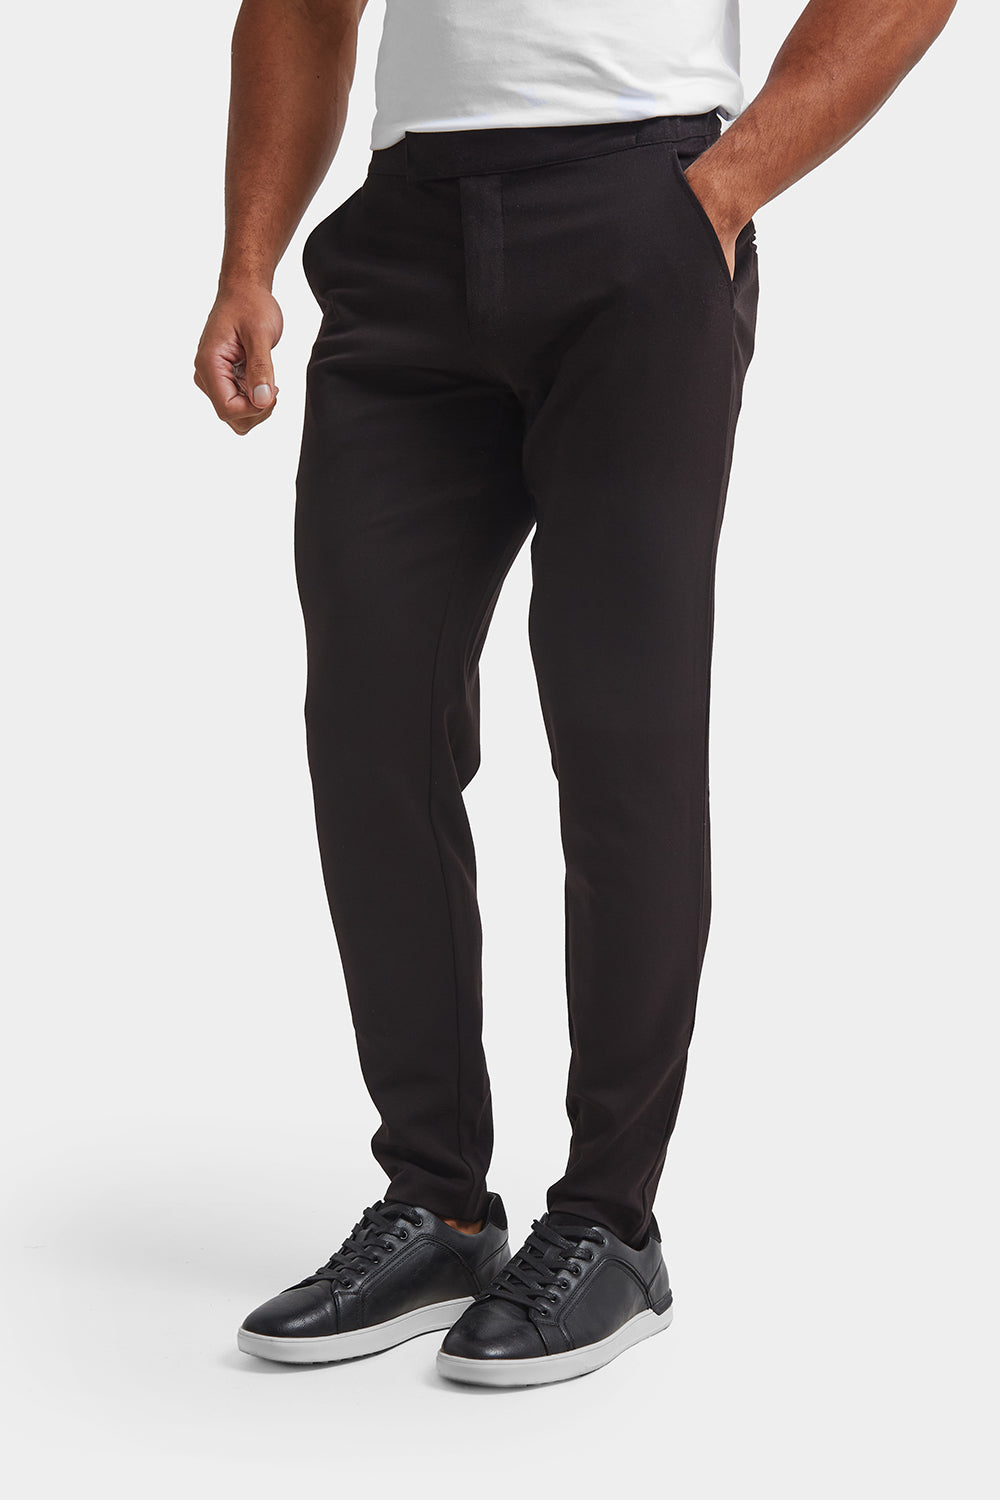 Black Men Fashion Casual Plus Size Loose Elastic Waist Jeans Street Wide  Leg Trousers Pants - Walmart.com